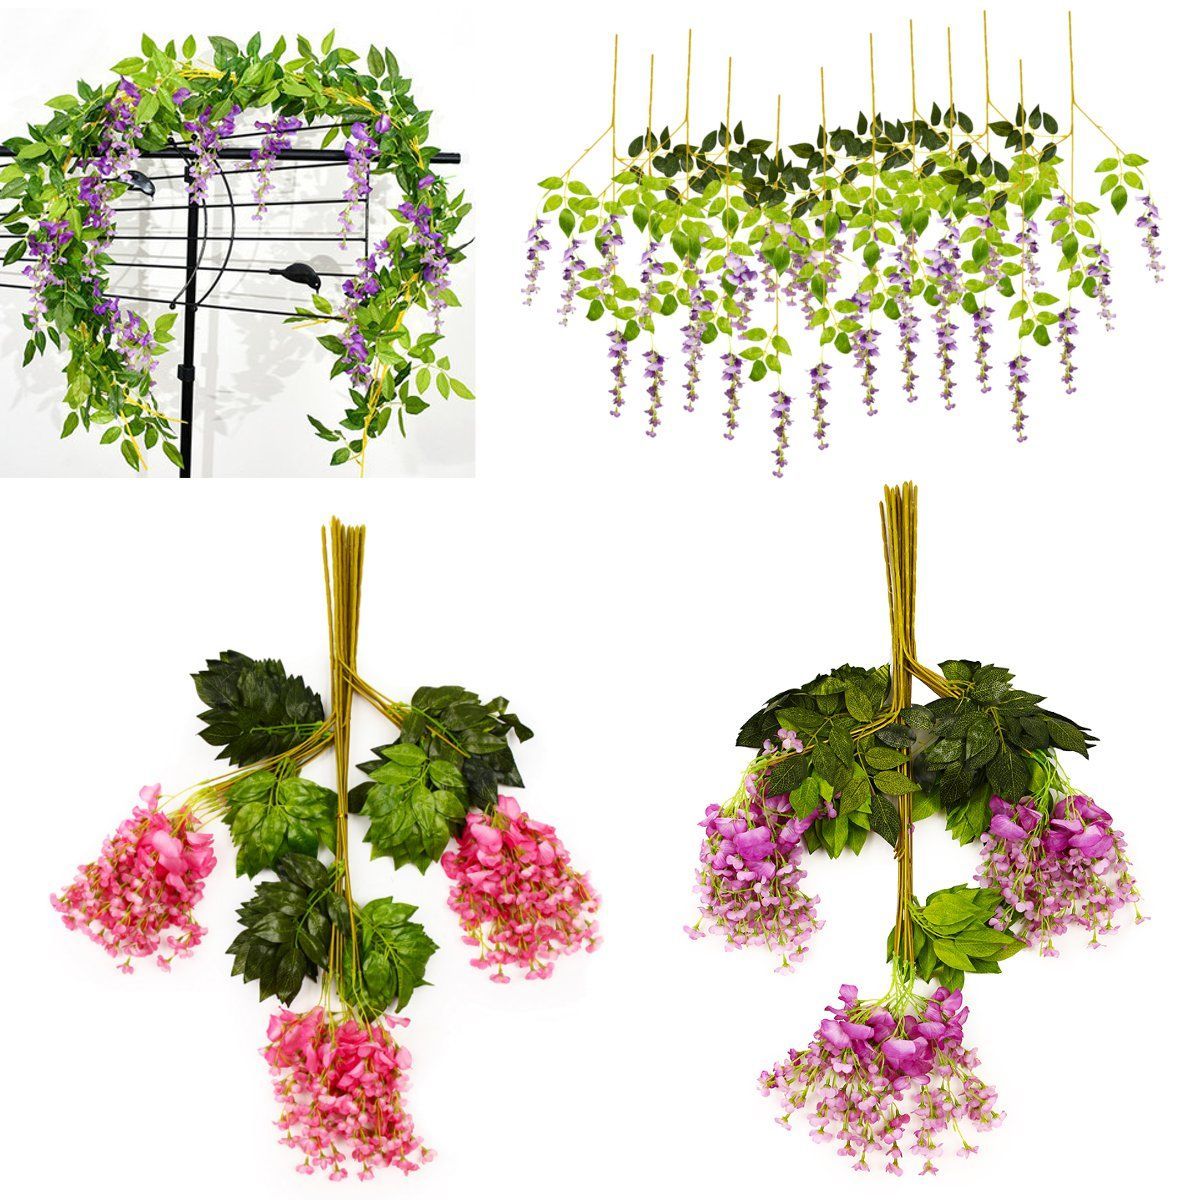 12-Pcs-Artificial-Silk-Flower-Wisteria-Vine-Hanging-Garland-Garden-Wedding-Decorations-1350406